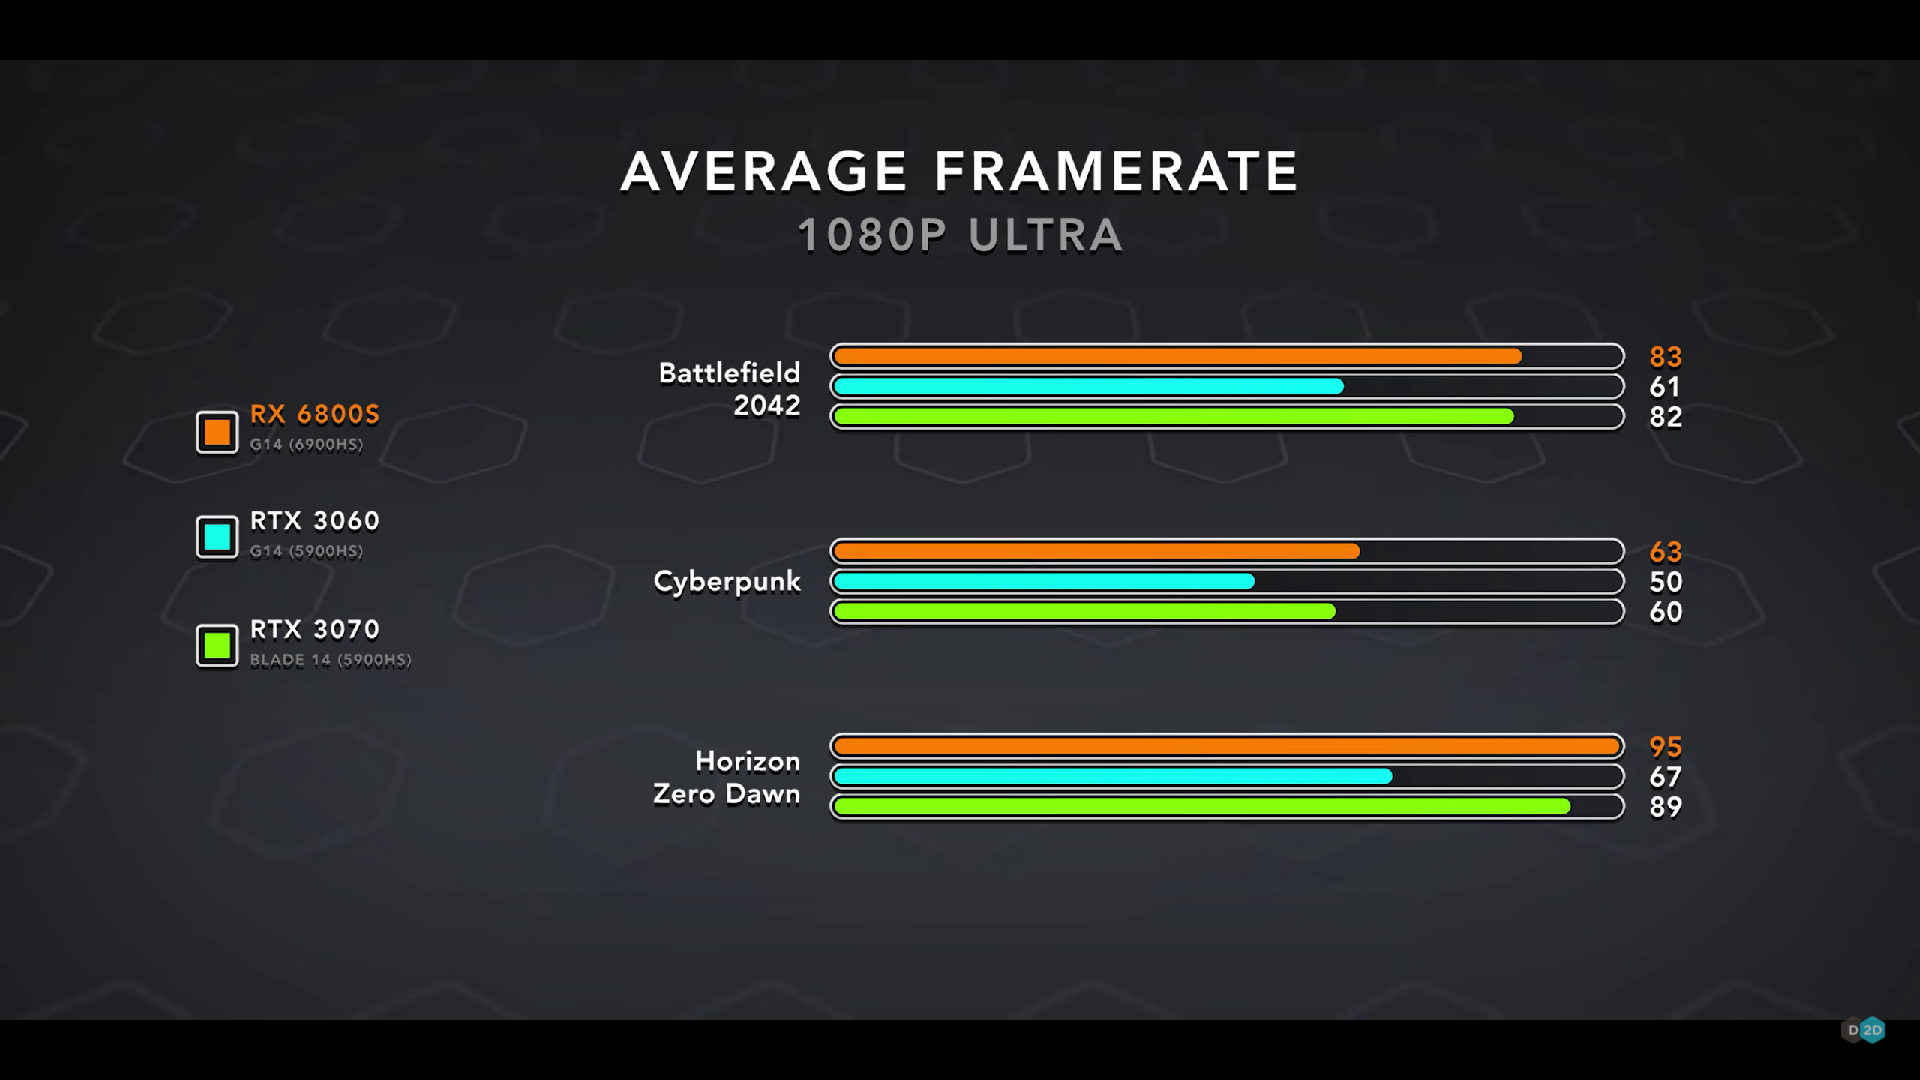 AMD's Ryzen 9 6900HS inside ROG Zephyrus G14 is the best for performance per watt